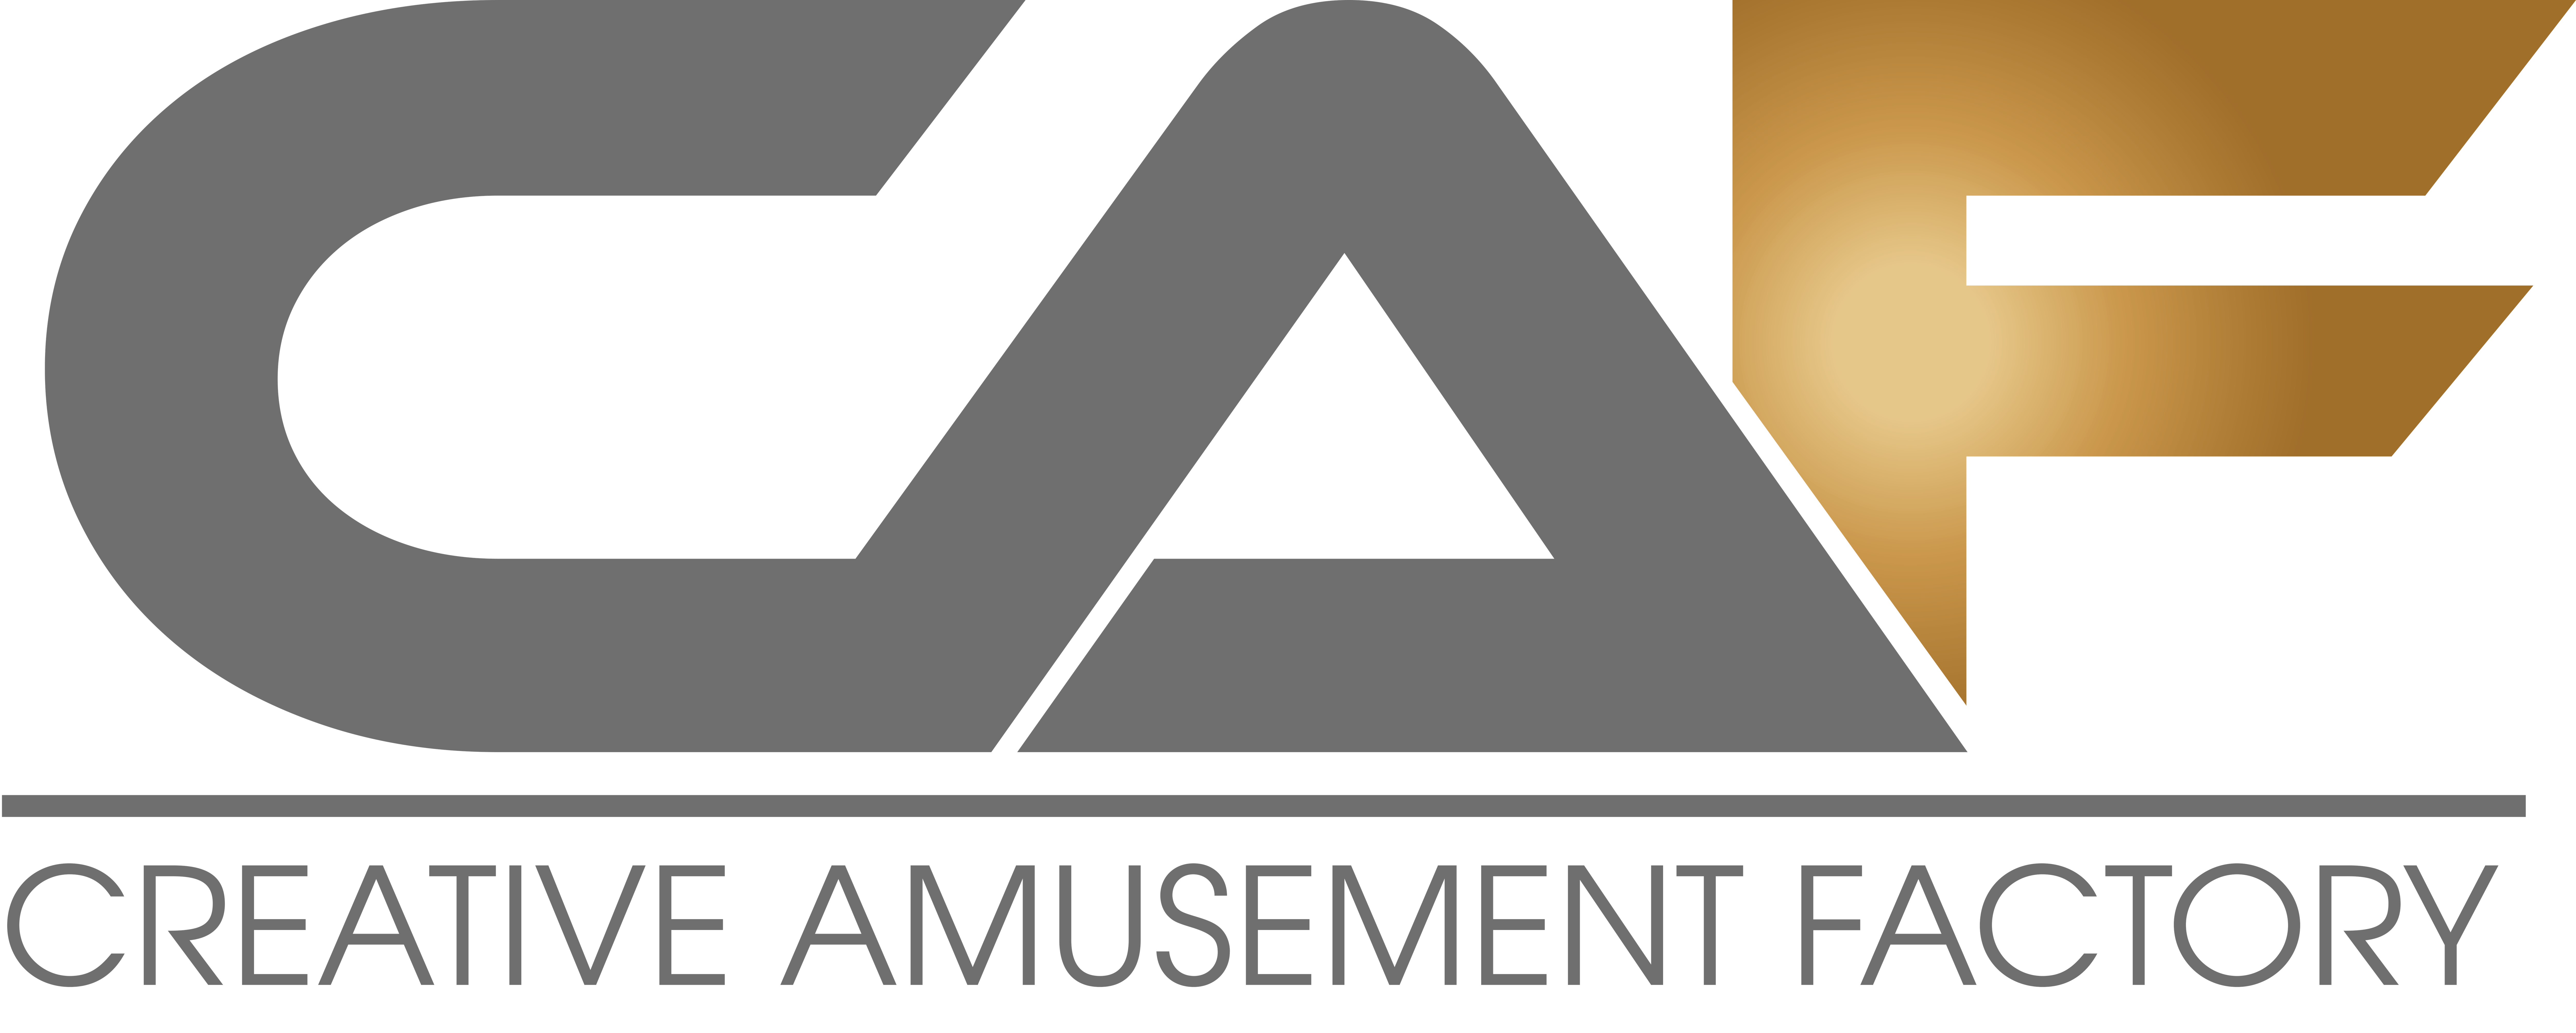 Creative Amusement Factory Logo